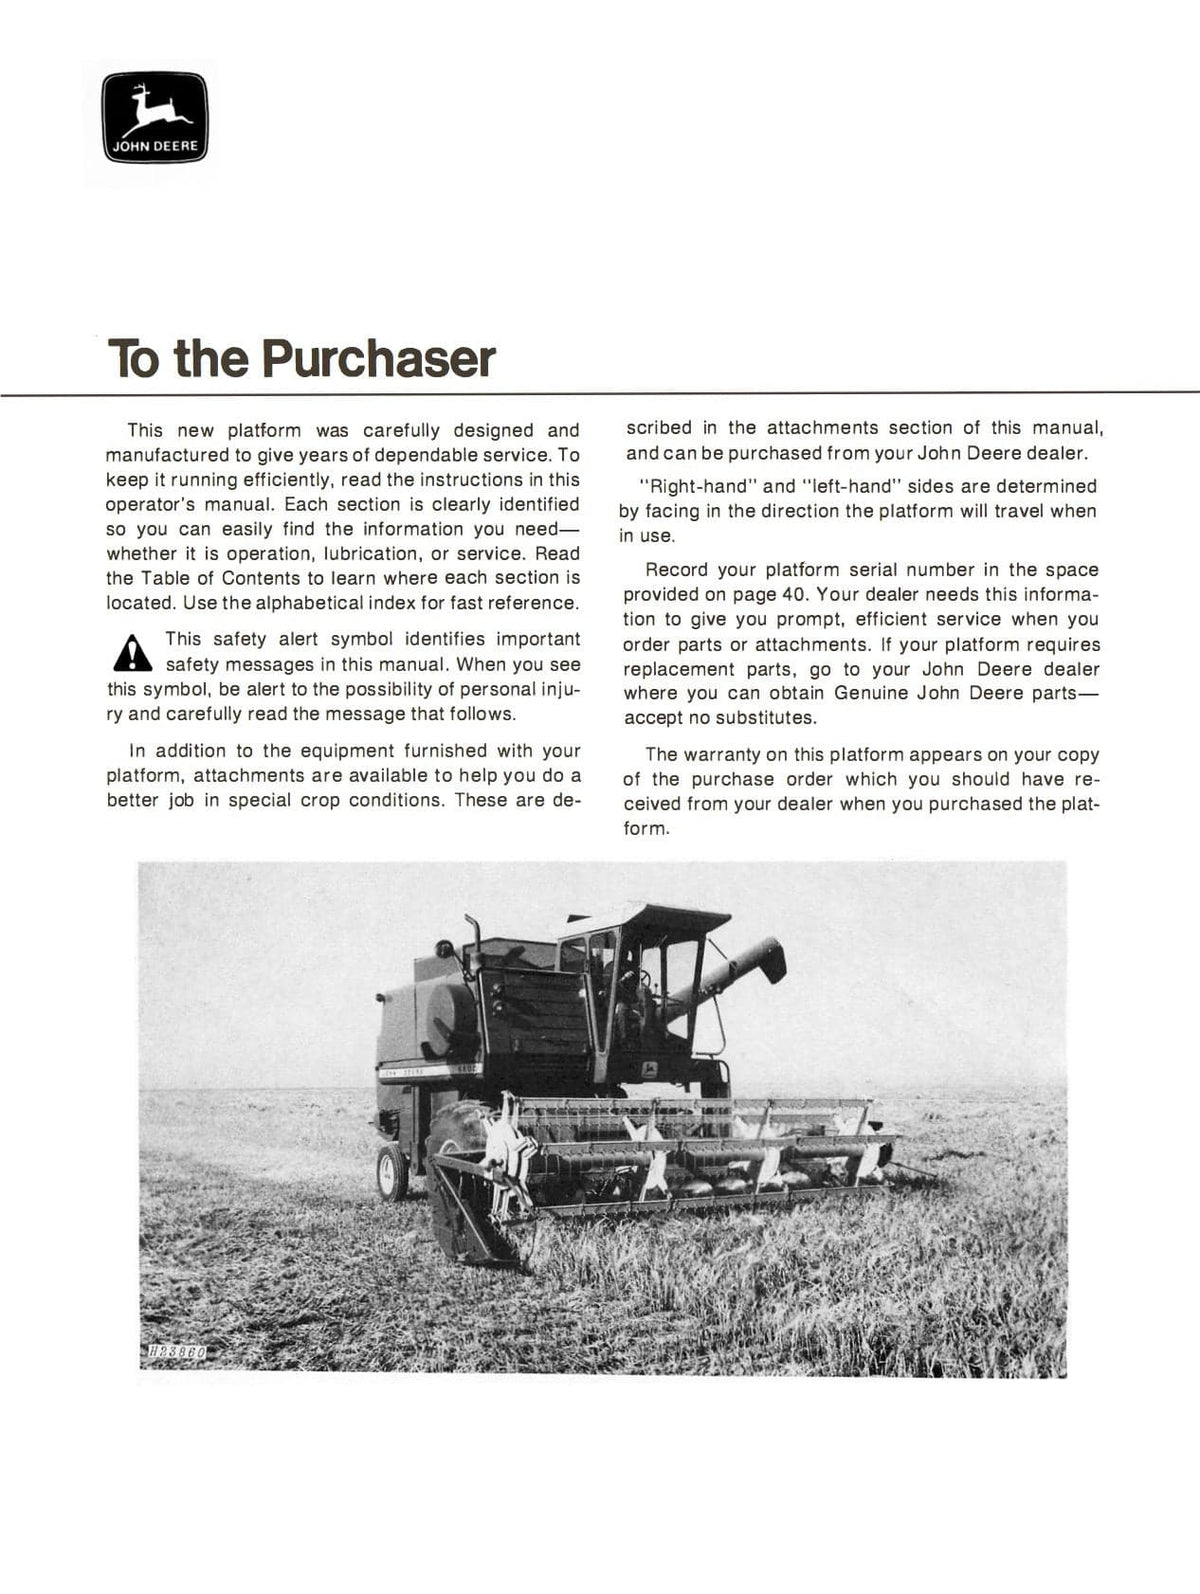 Download John Deere Combine Quik-Tatch Platforms - Operator's Manual - Ag Manuals - A Provider of Digital Farm Manuals - 1